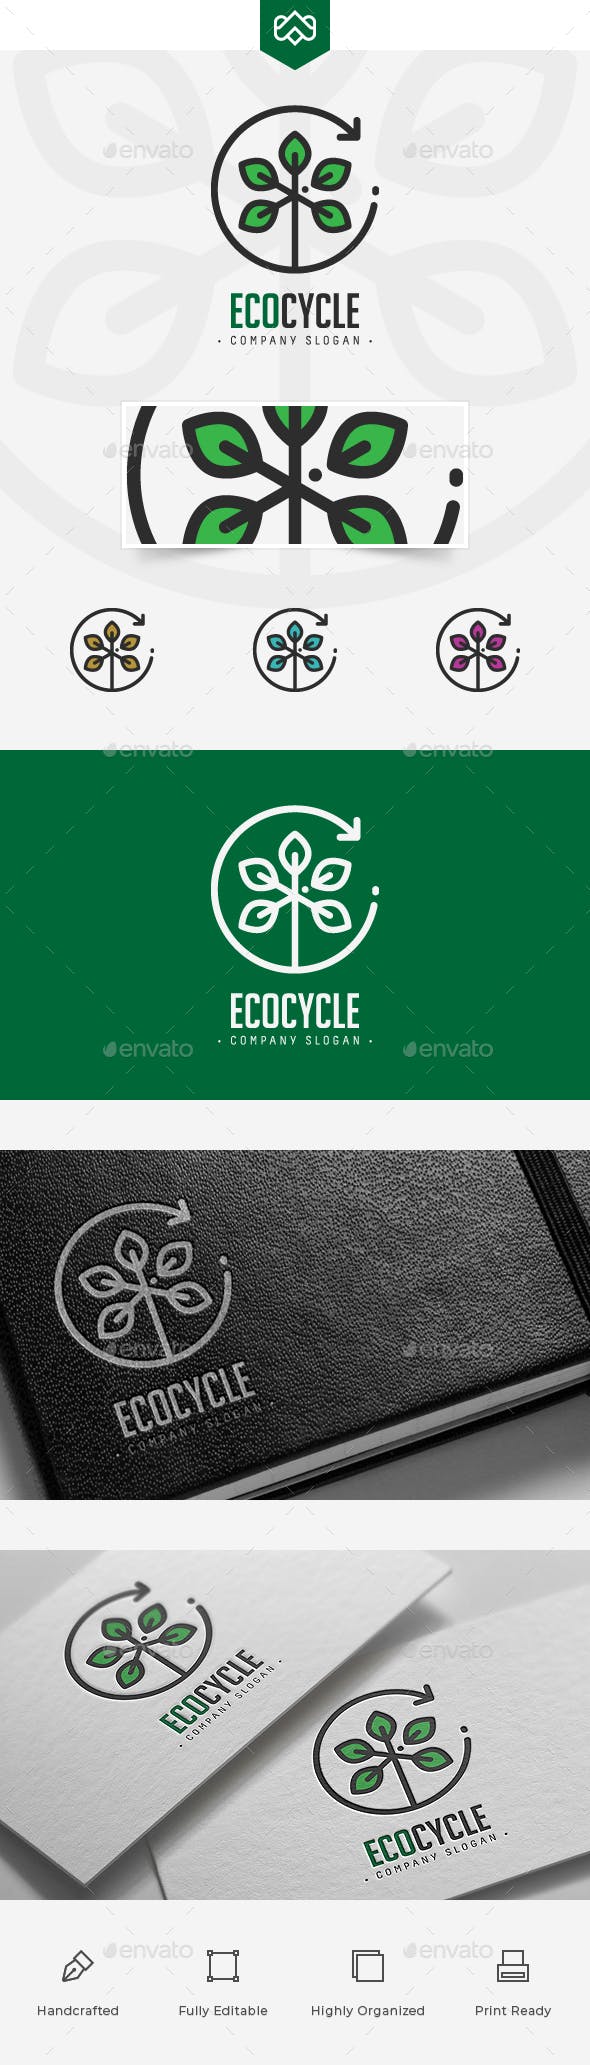 EcoLogo Logo - Eco Logo by MAOV | GraphicRiver